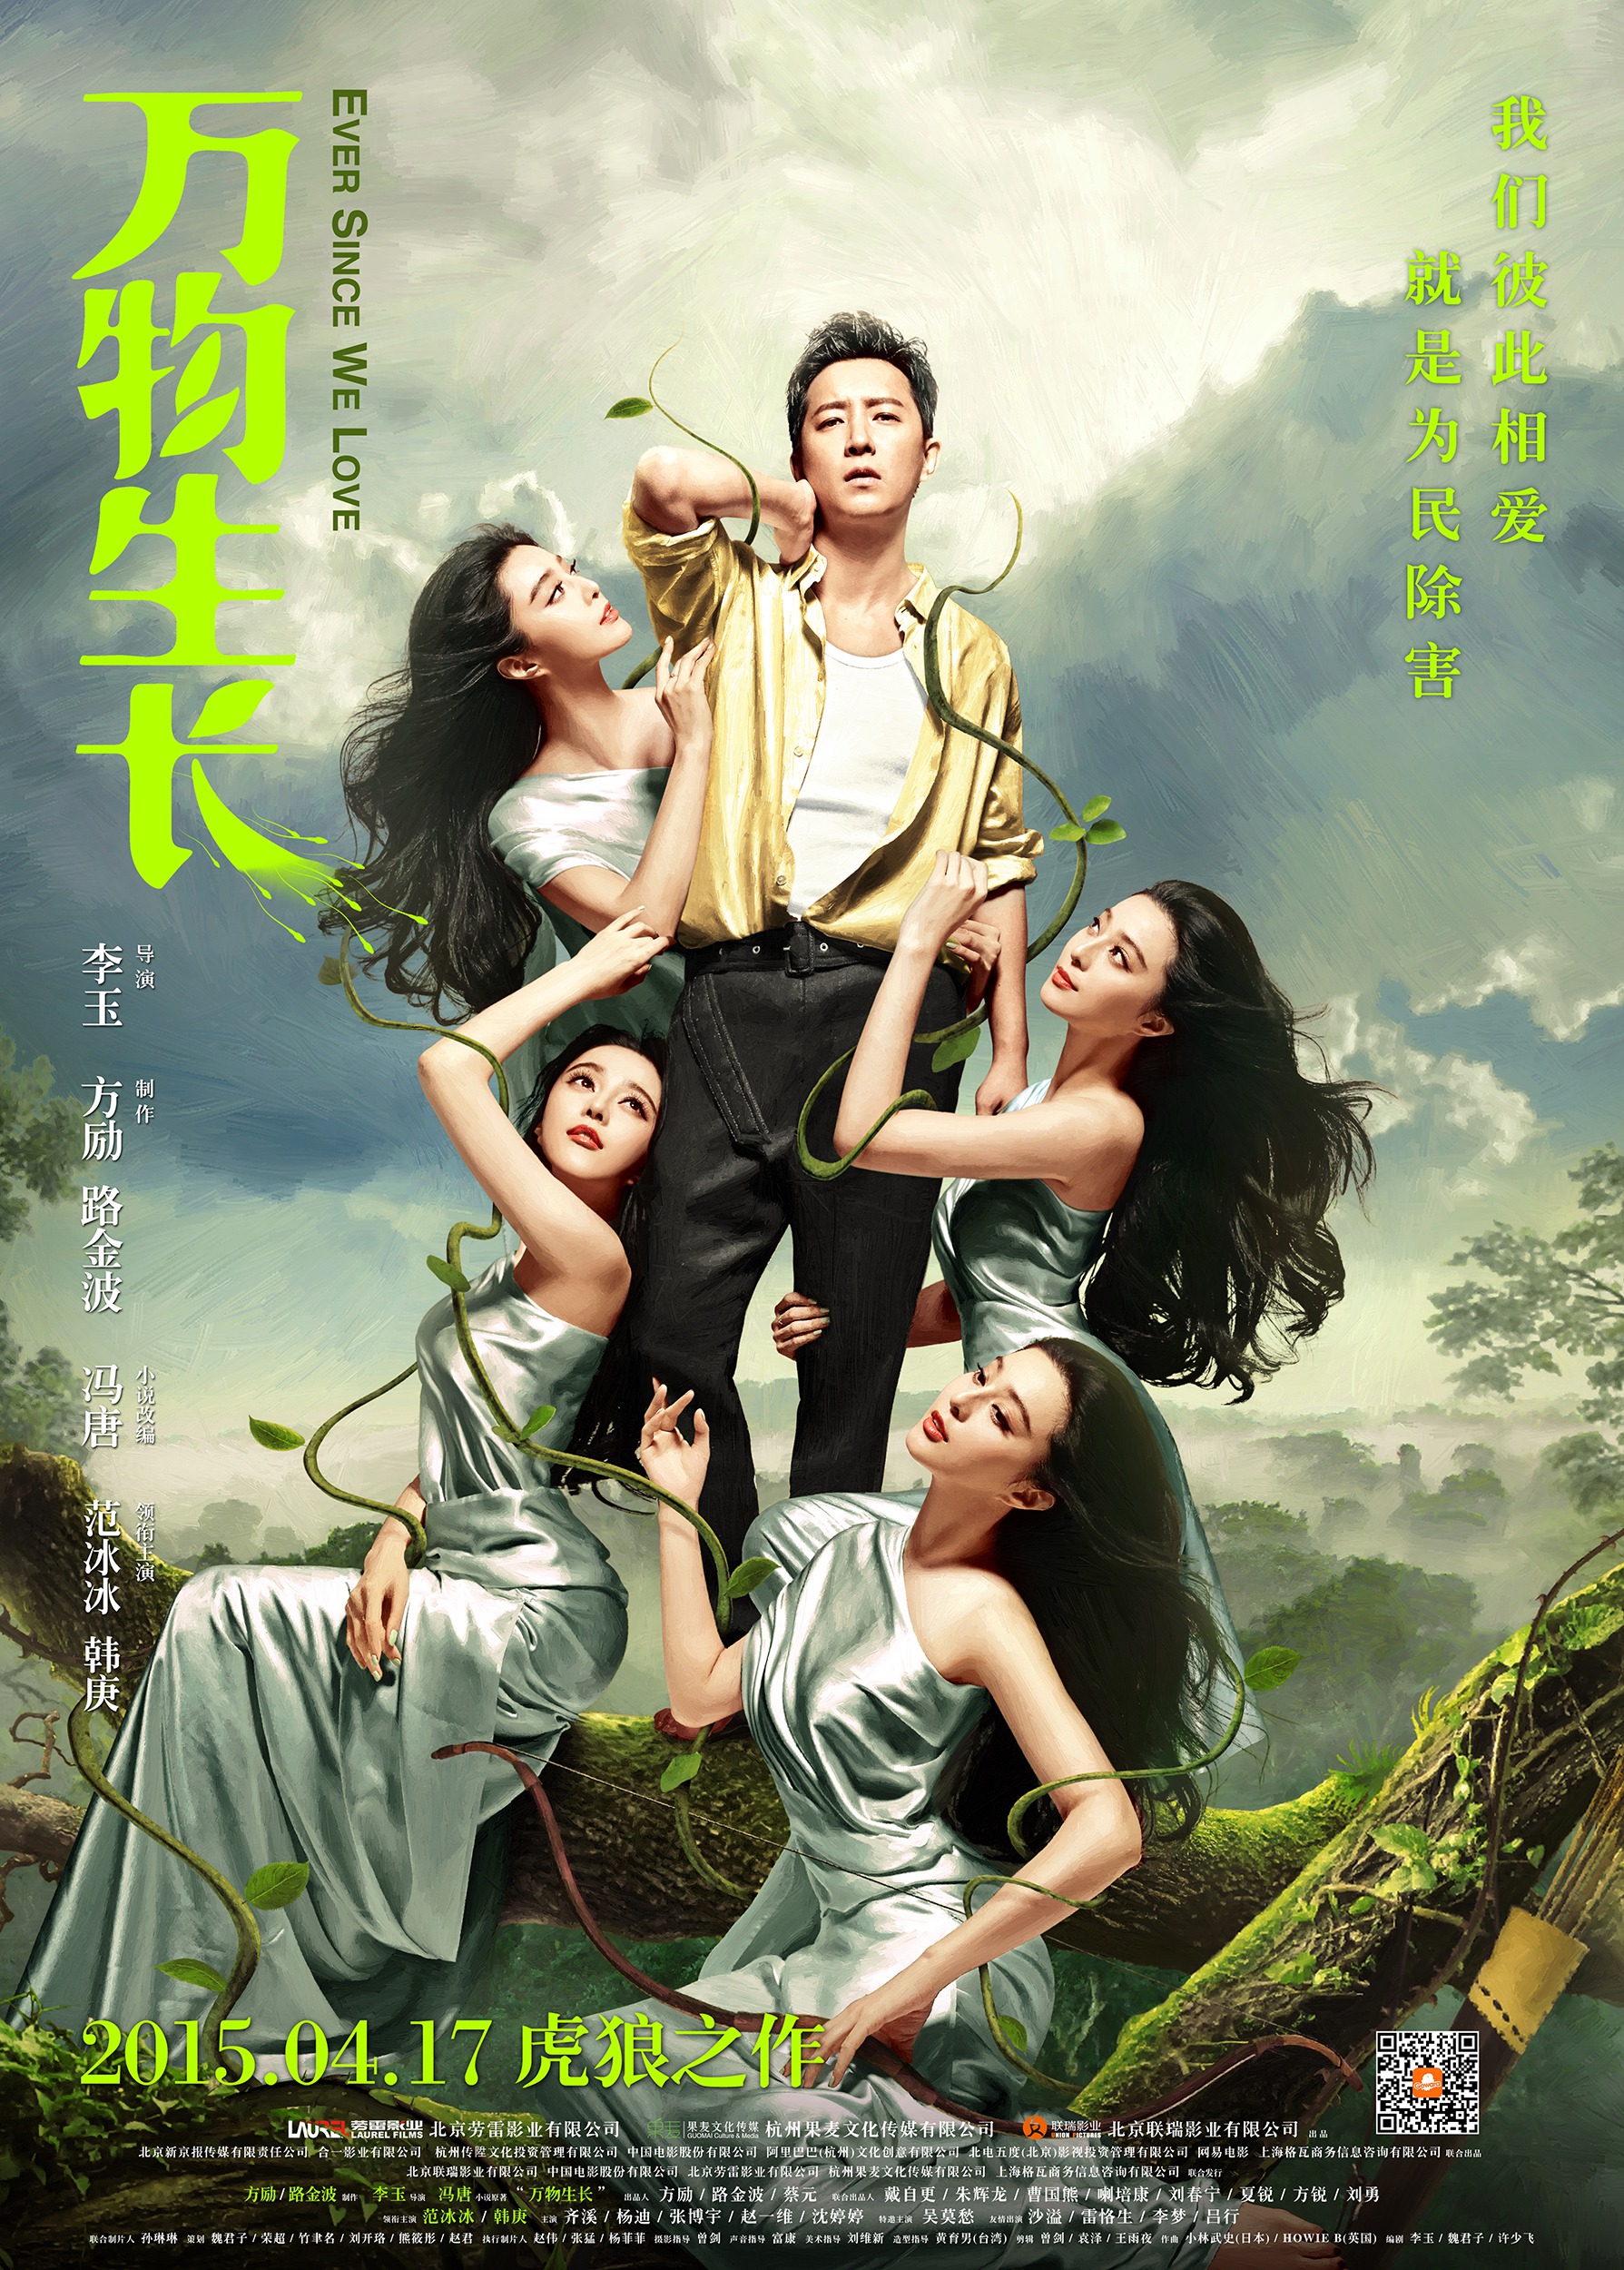 Mega Sized Movie Poster Image for Wan Wu Sheng Zhang (#1 of 4)